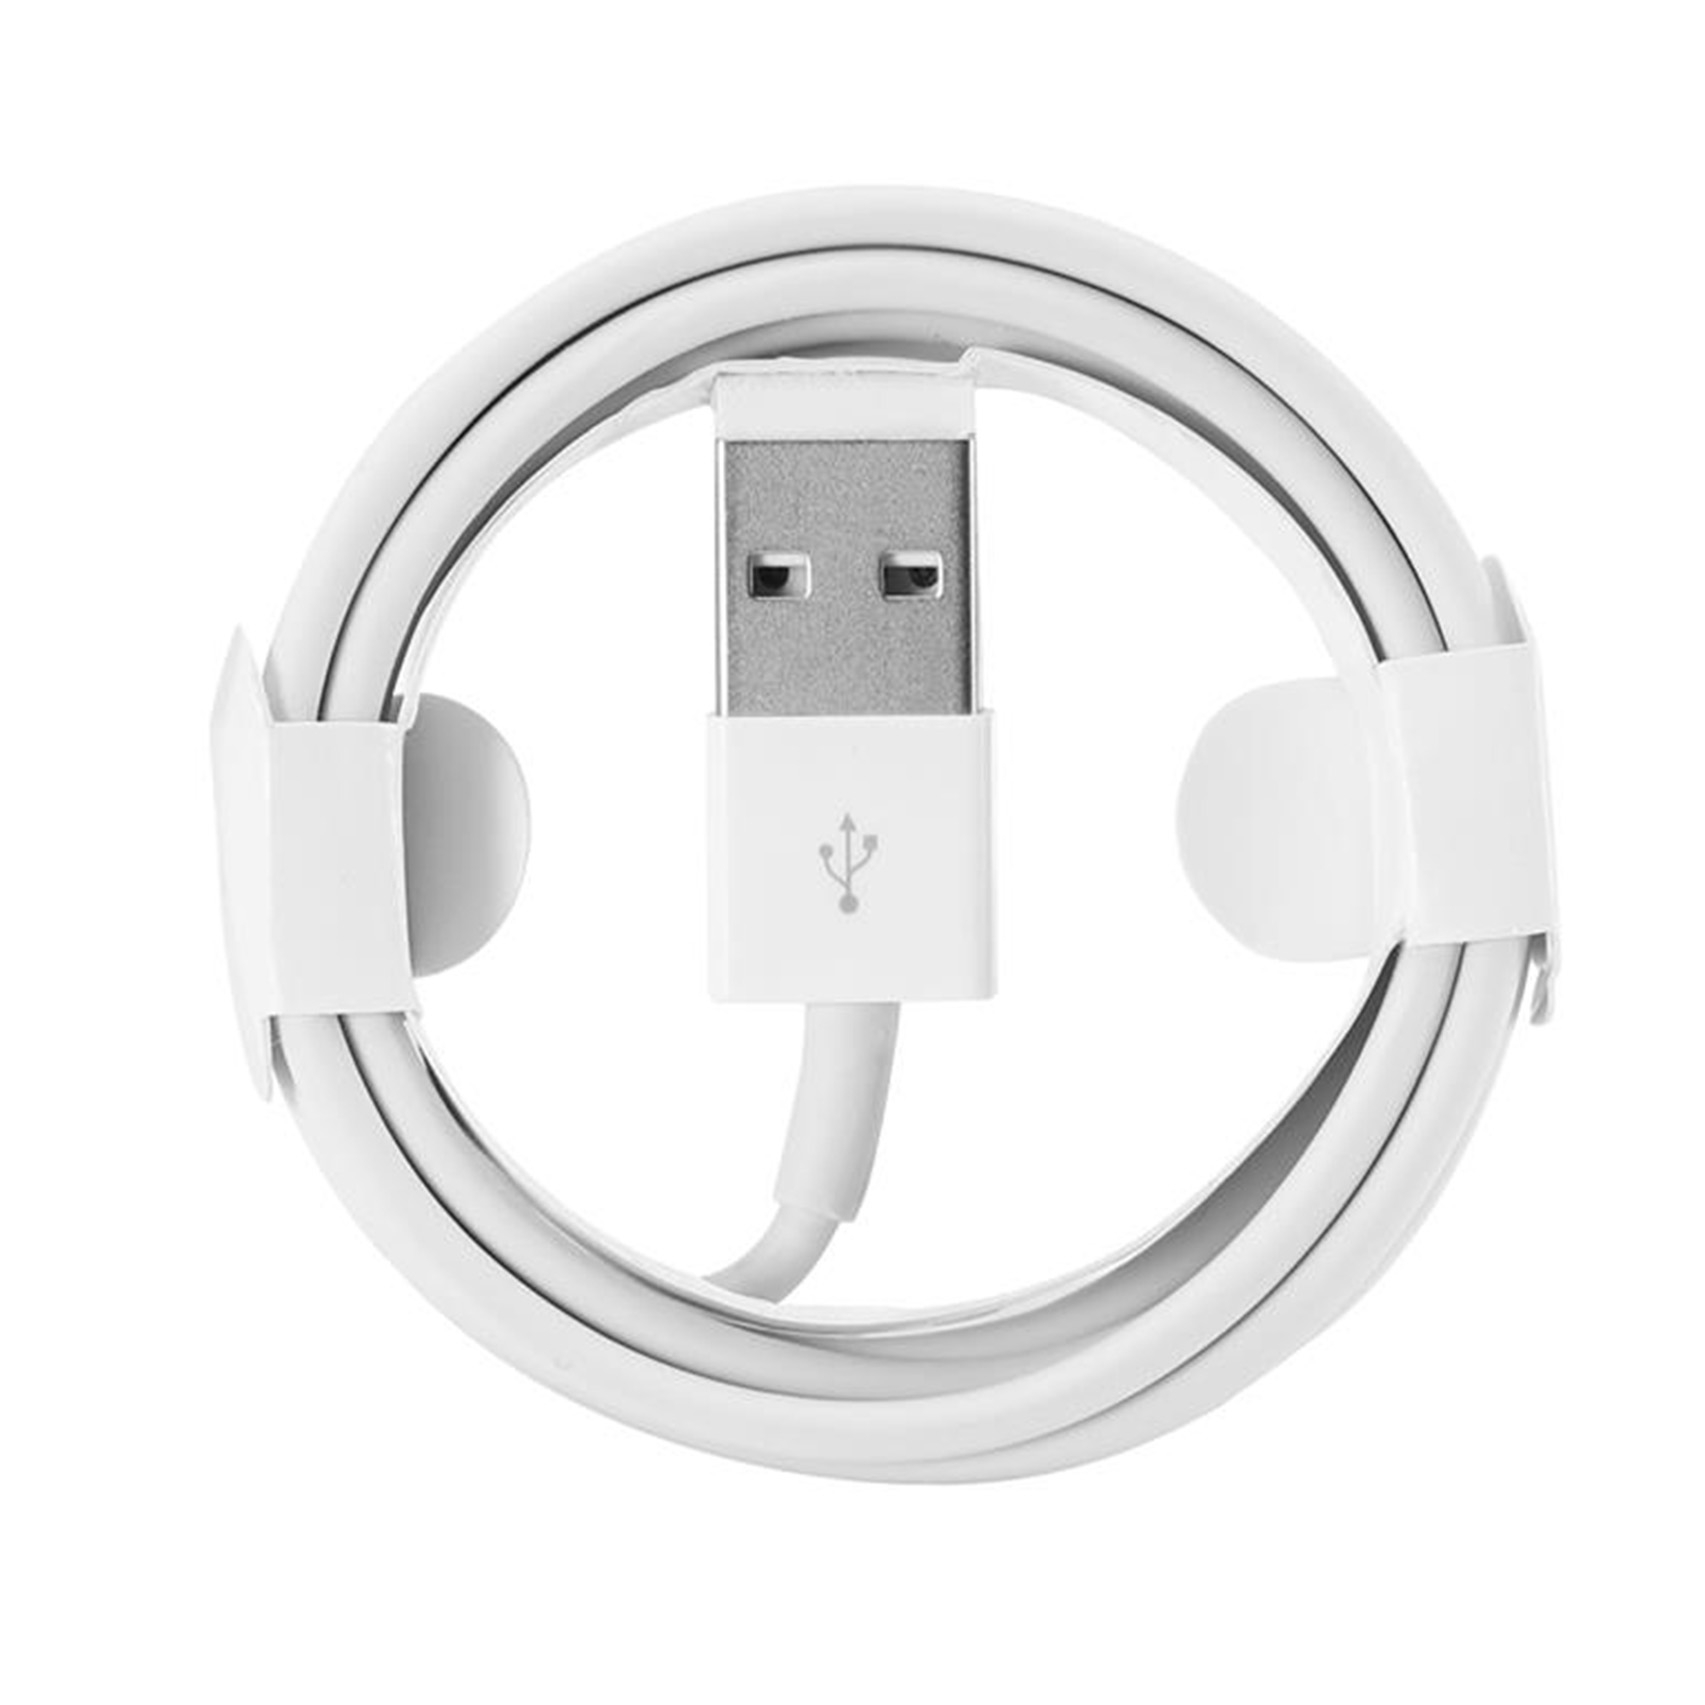 3x iPhone 6 Plus Lightning auf USB Kabel 1m Ladekabel